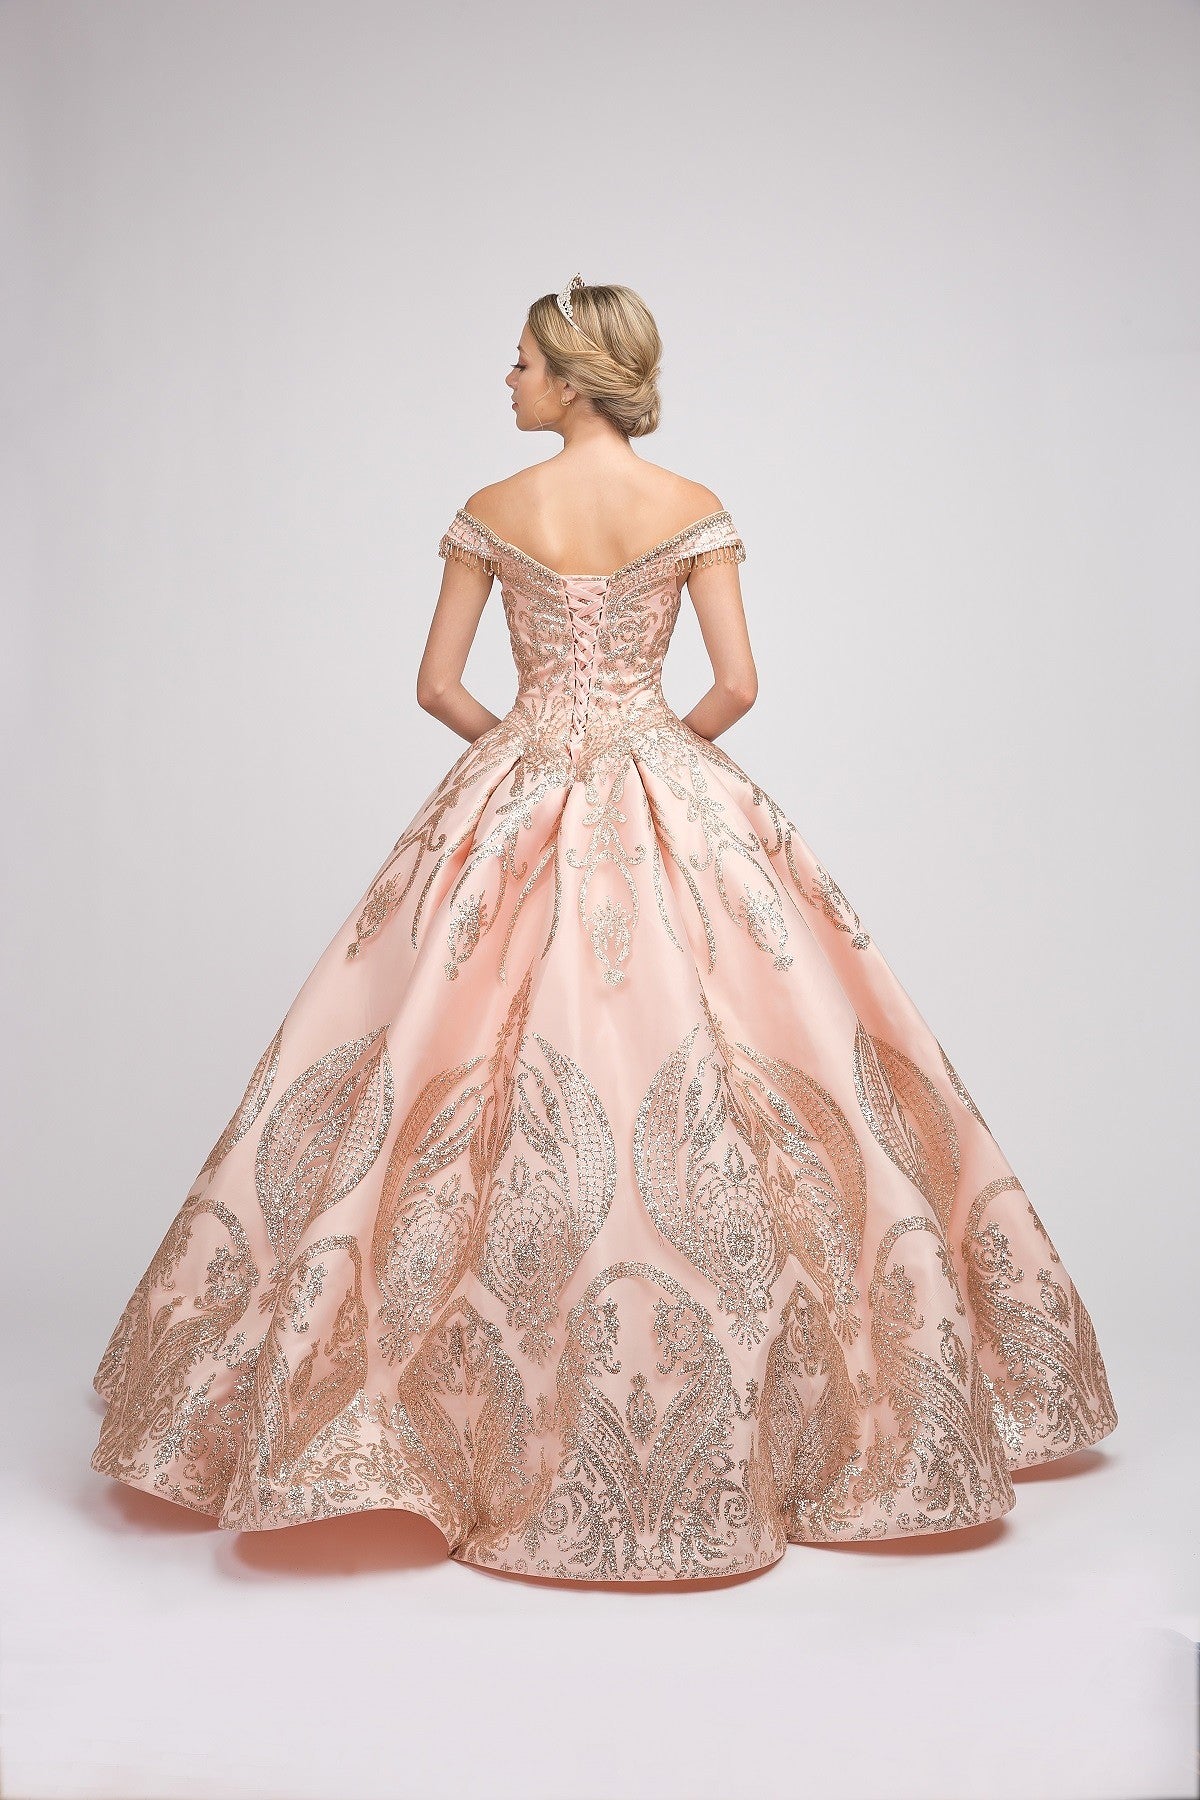 Rose gold quinceanera dress